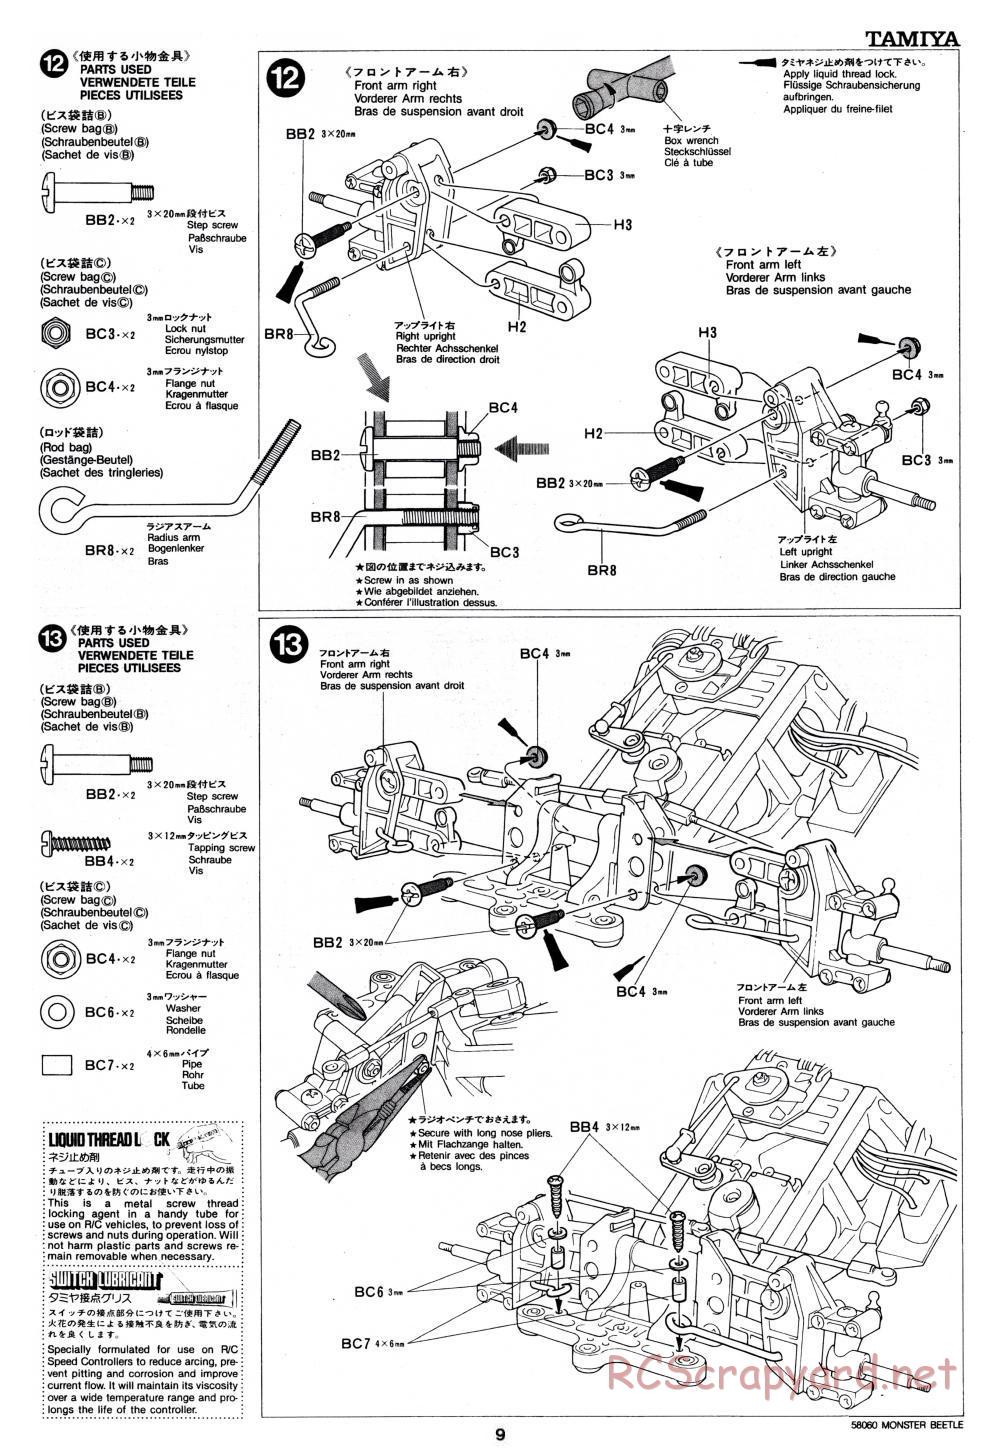 Tamiya - Monster Beetle - 58060 - Manual - Page 9